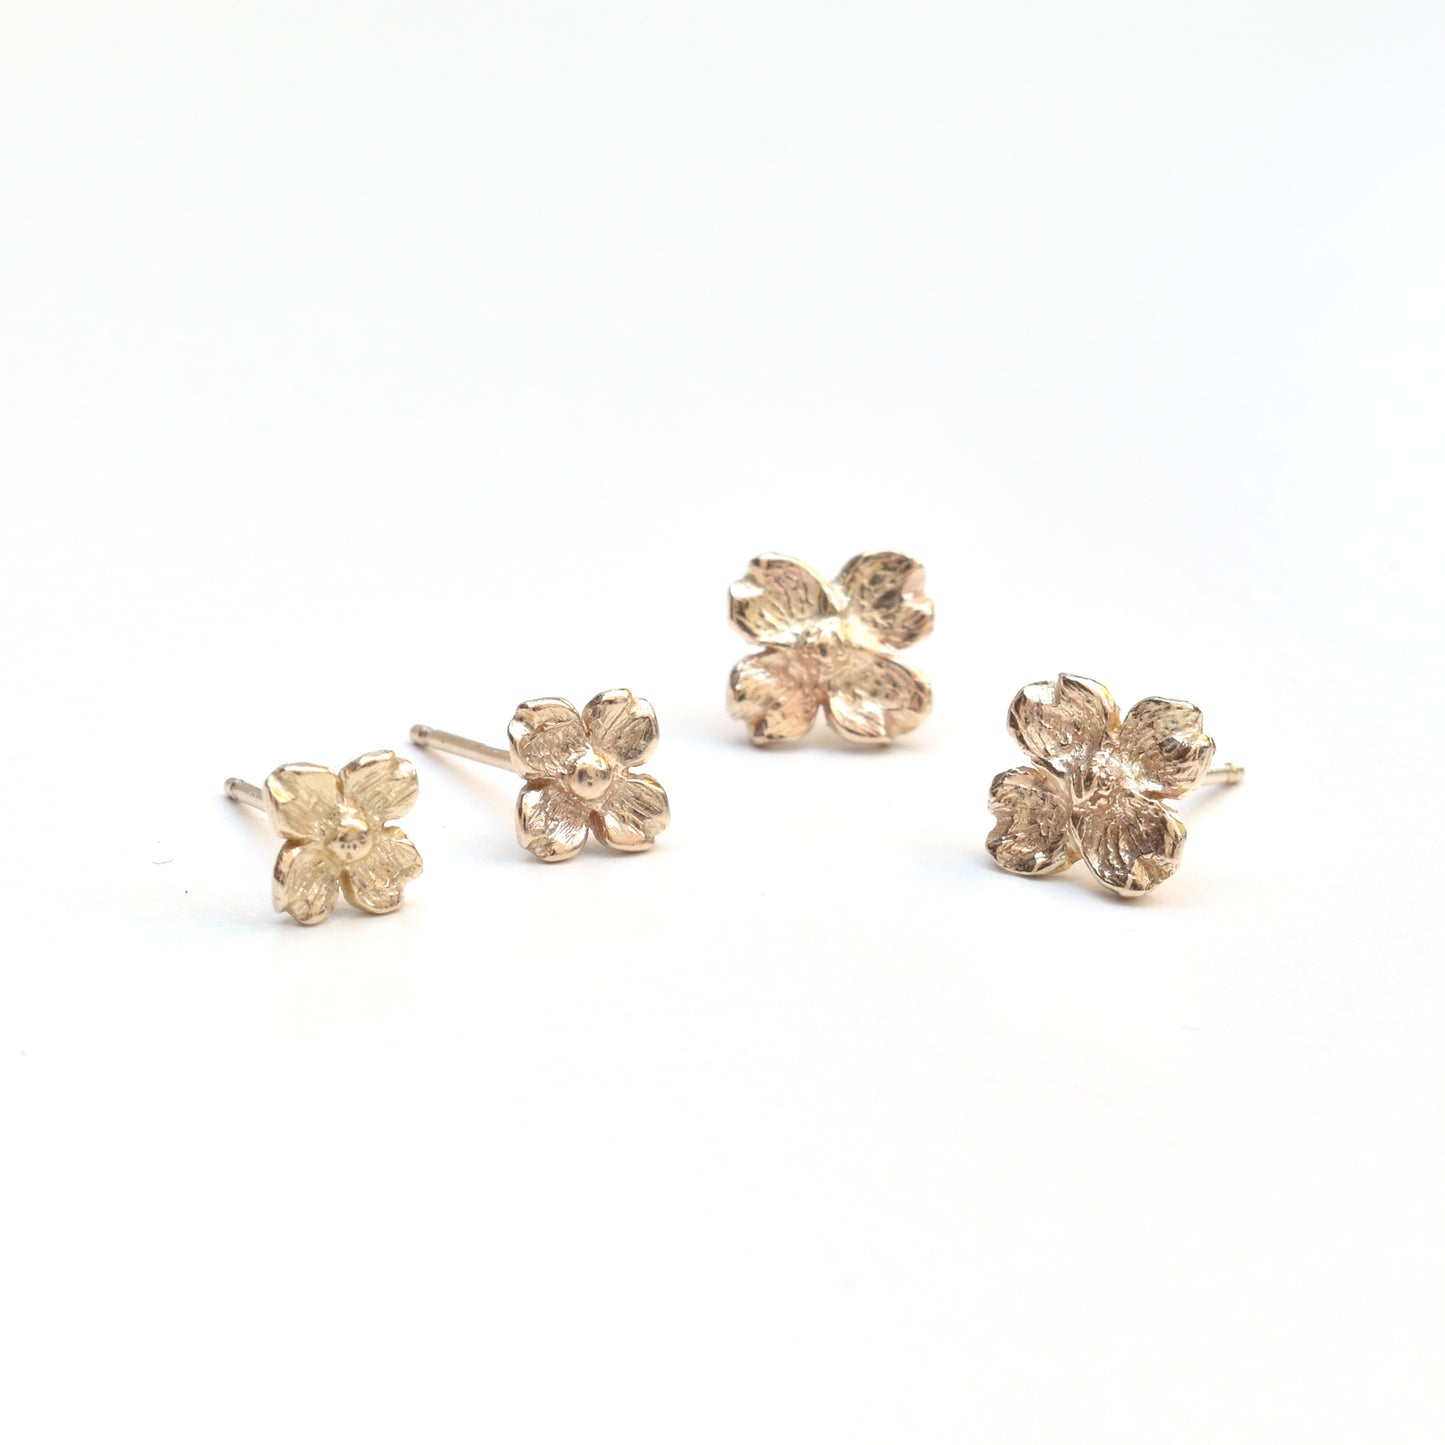 Dogwood Blossom Earrings, Tiny Gold